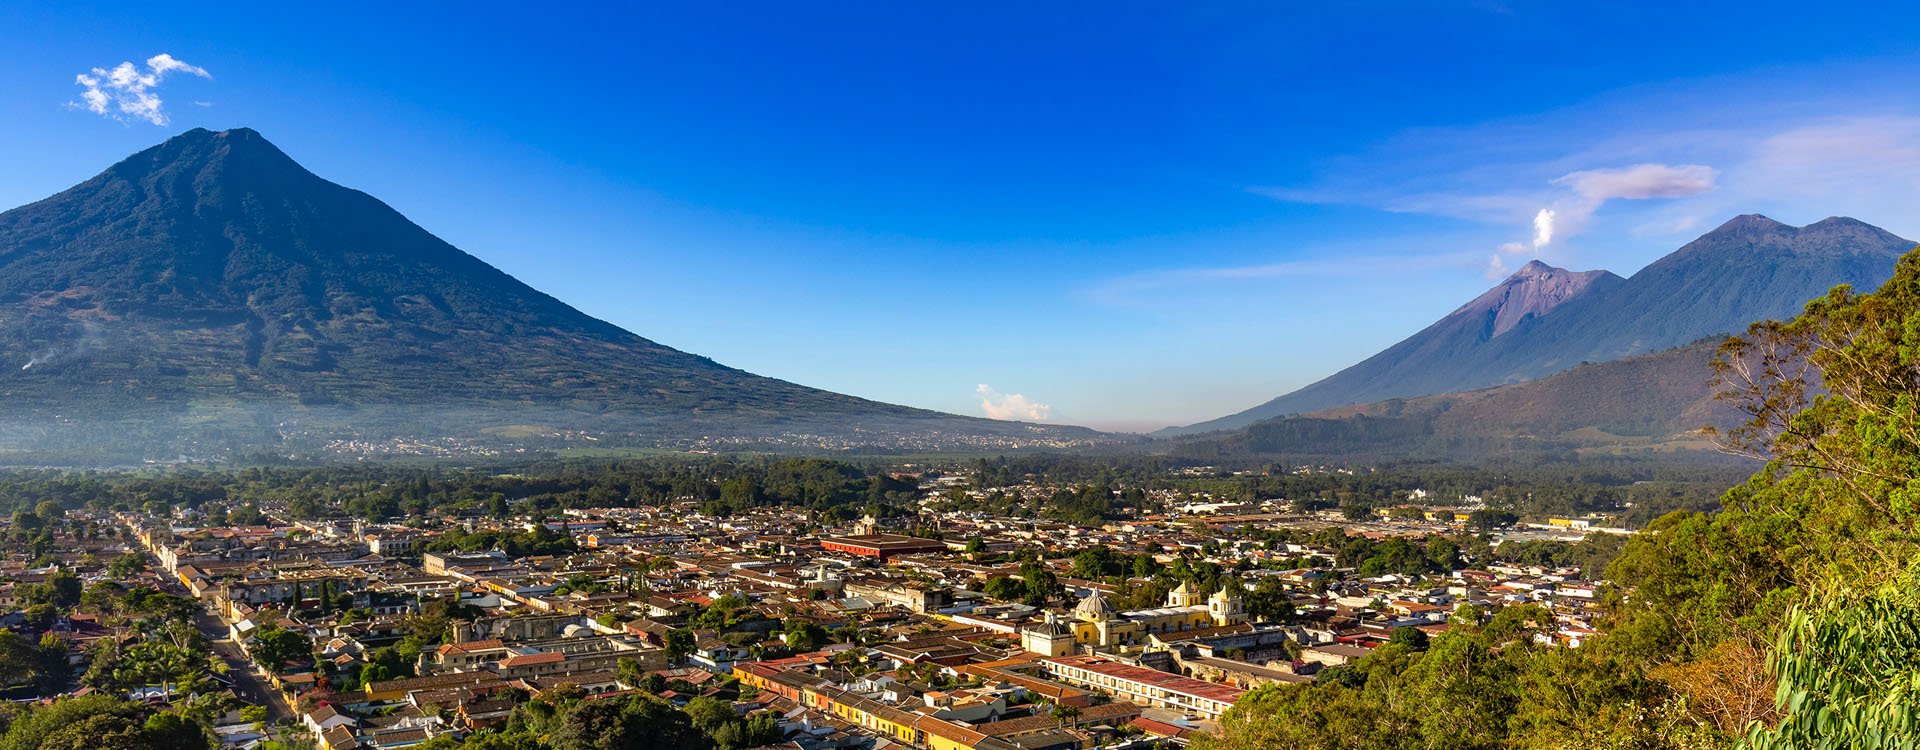 Guatemala. Antigua, surrounding volcanoes dormant Agua, smoky Fuego and Acatenango